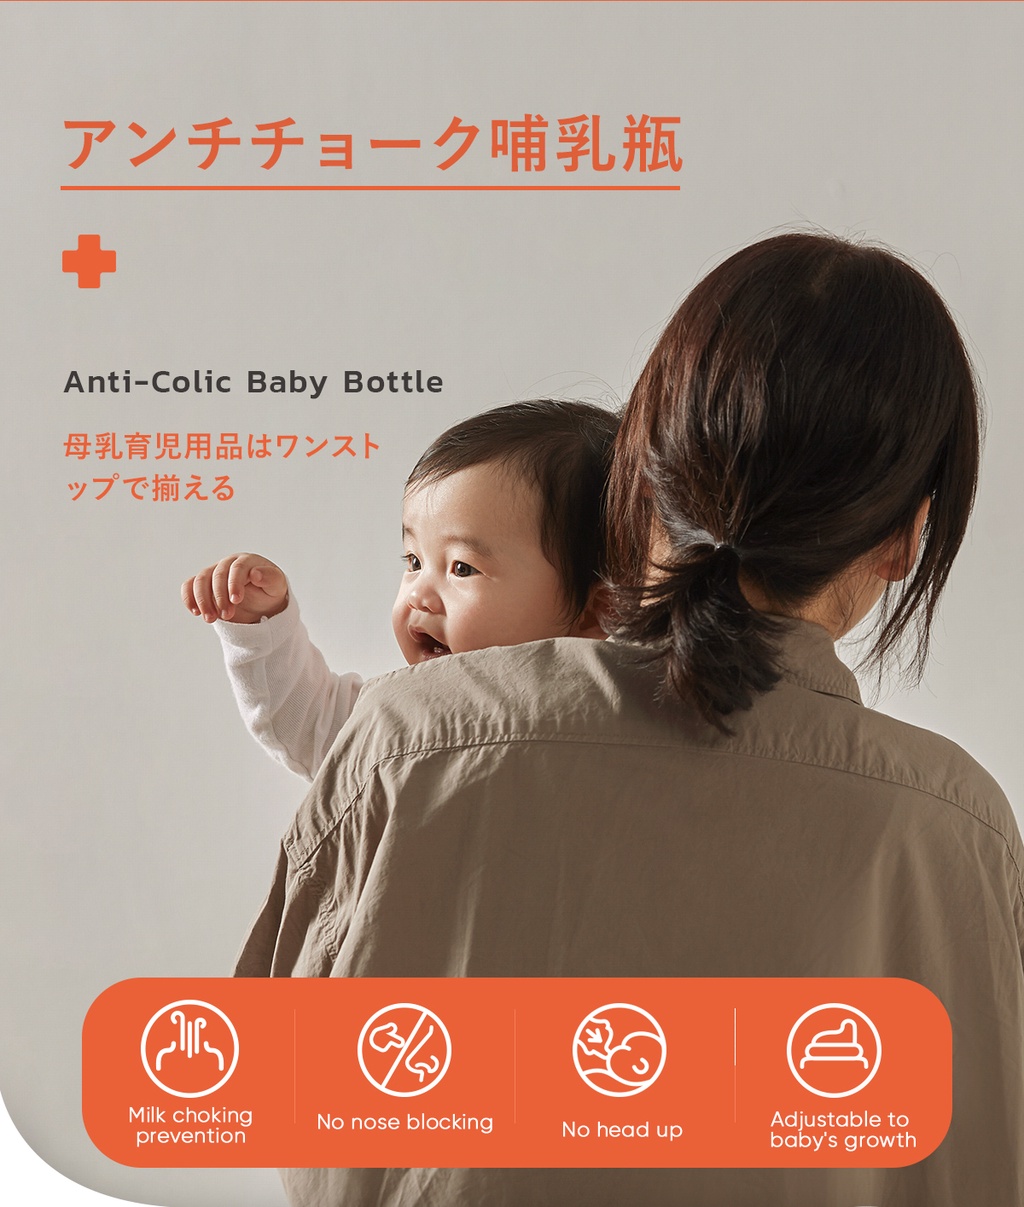 yoboo Anti Colic Baby Feeding Bottle, Newborn Anti Colic Bottles For Sale